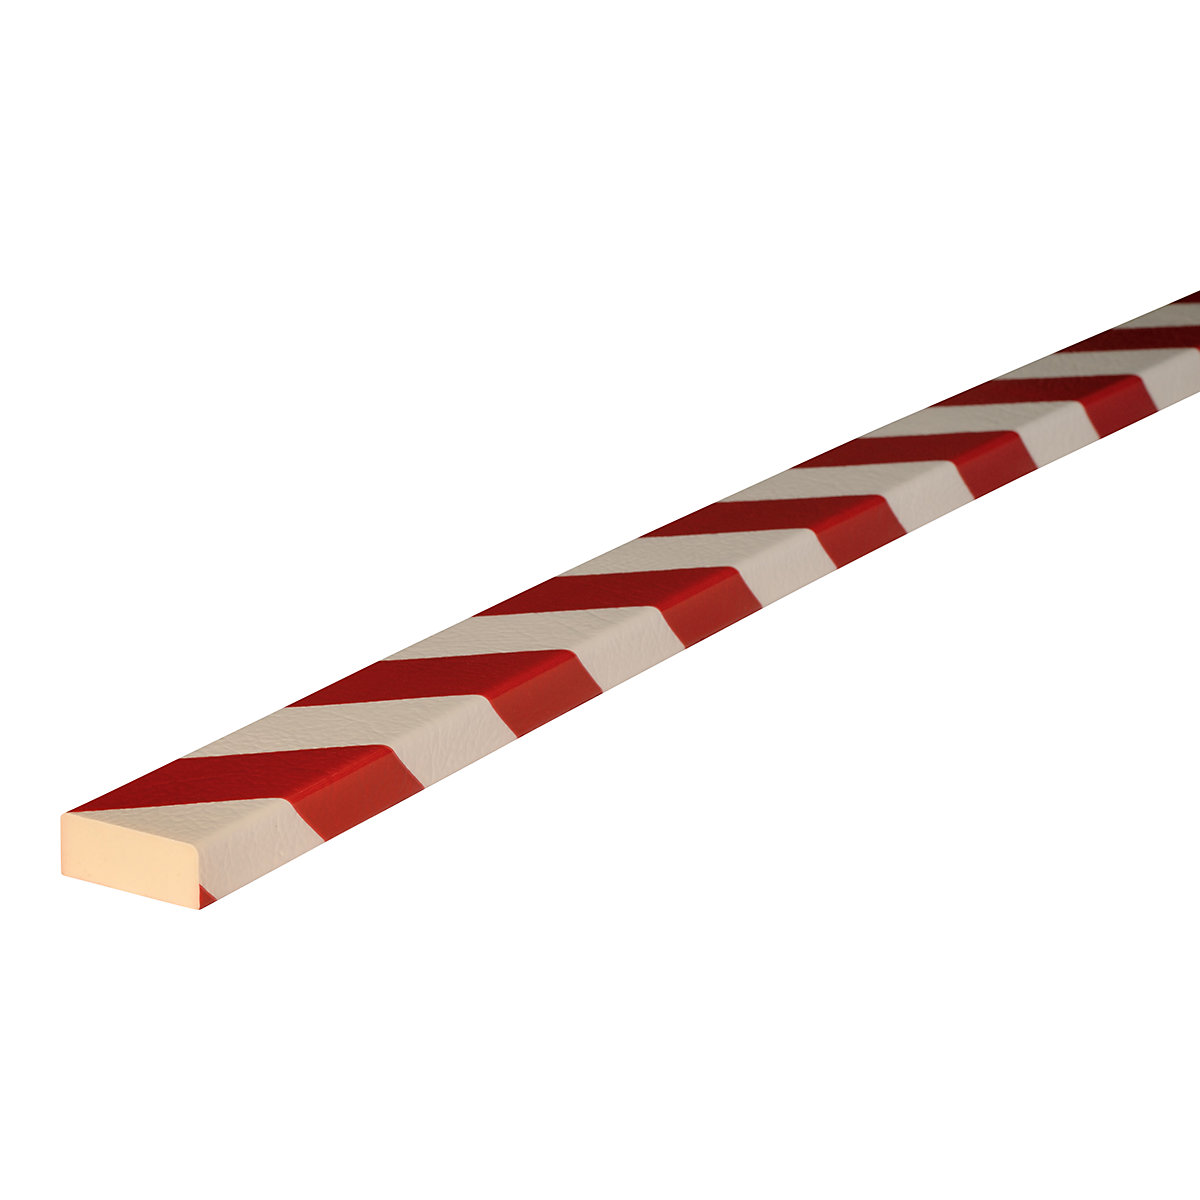 Knuffi®-oppervlaktebescherming – SHG, type D, stuk van 1 m, magneet, rood/wit-17